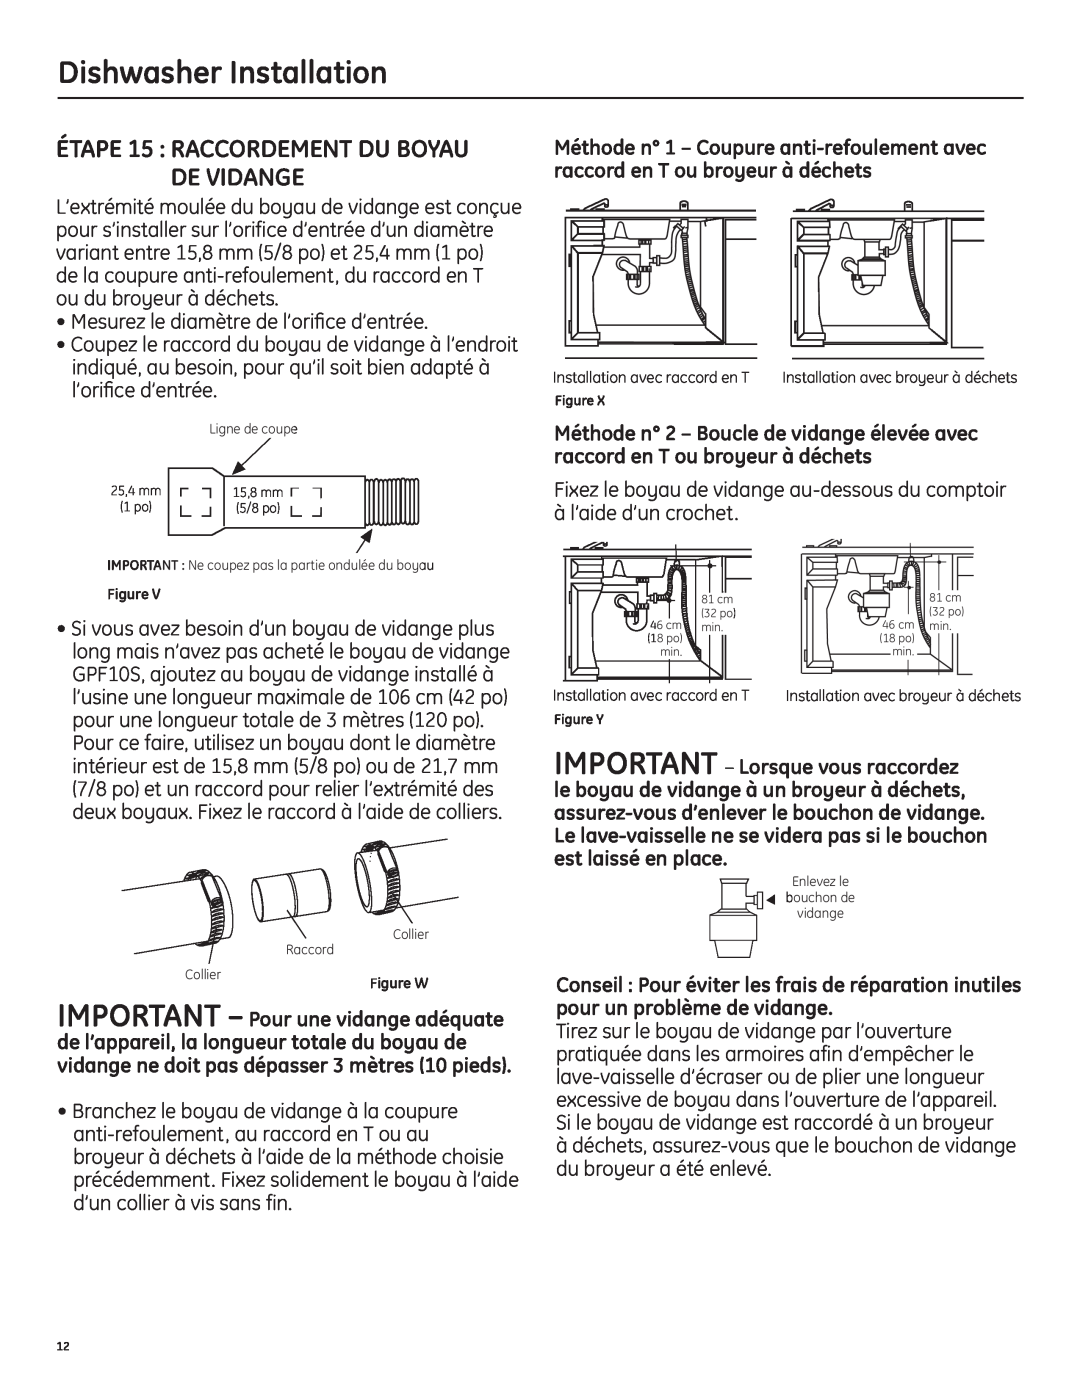 GE 206C1559P195 installation instructions ÉTAPE 15 RACCORDEMENT DU BOYAU DE VIDANGE, Dishwasher Installation 